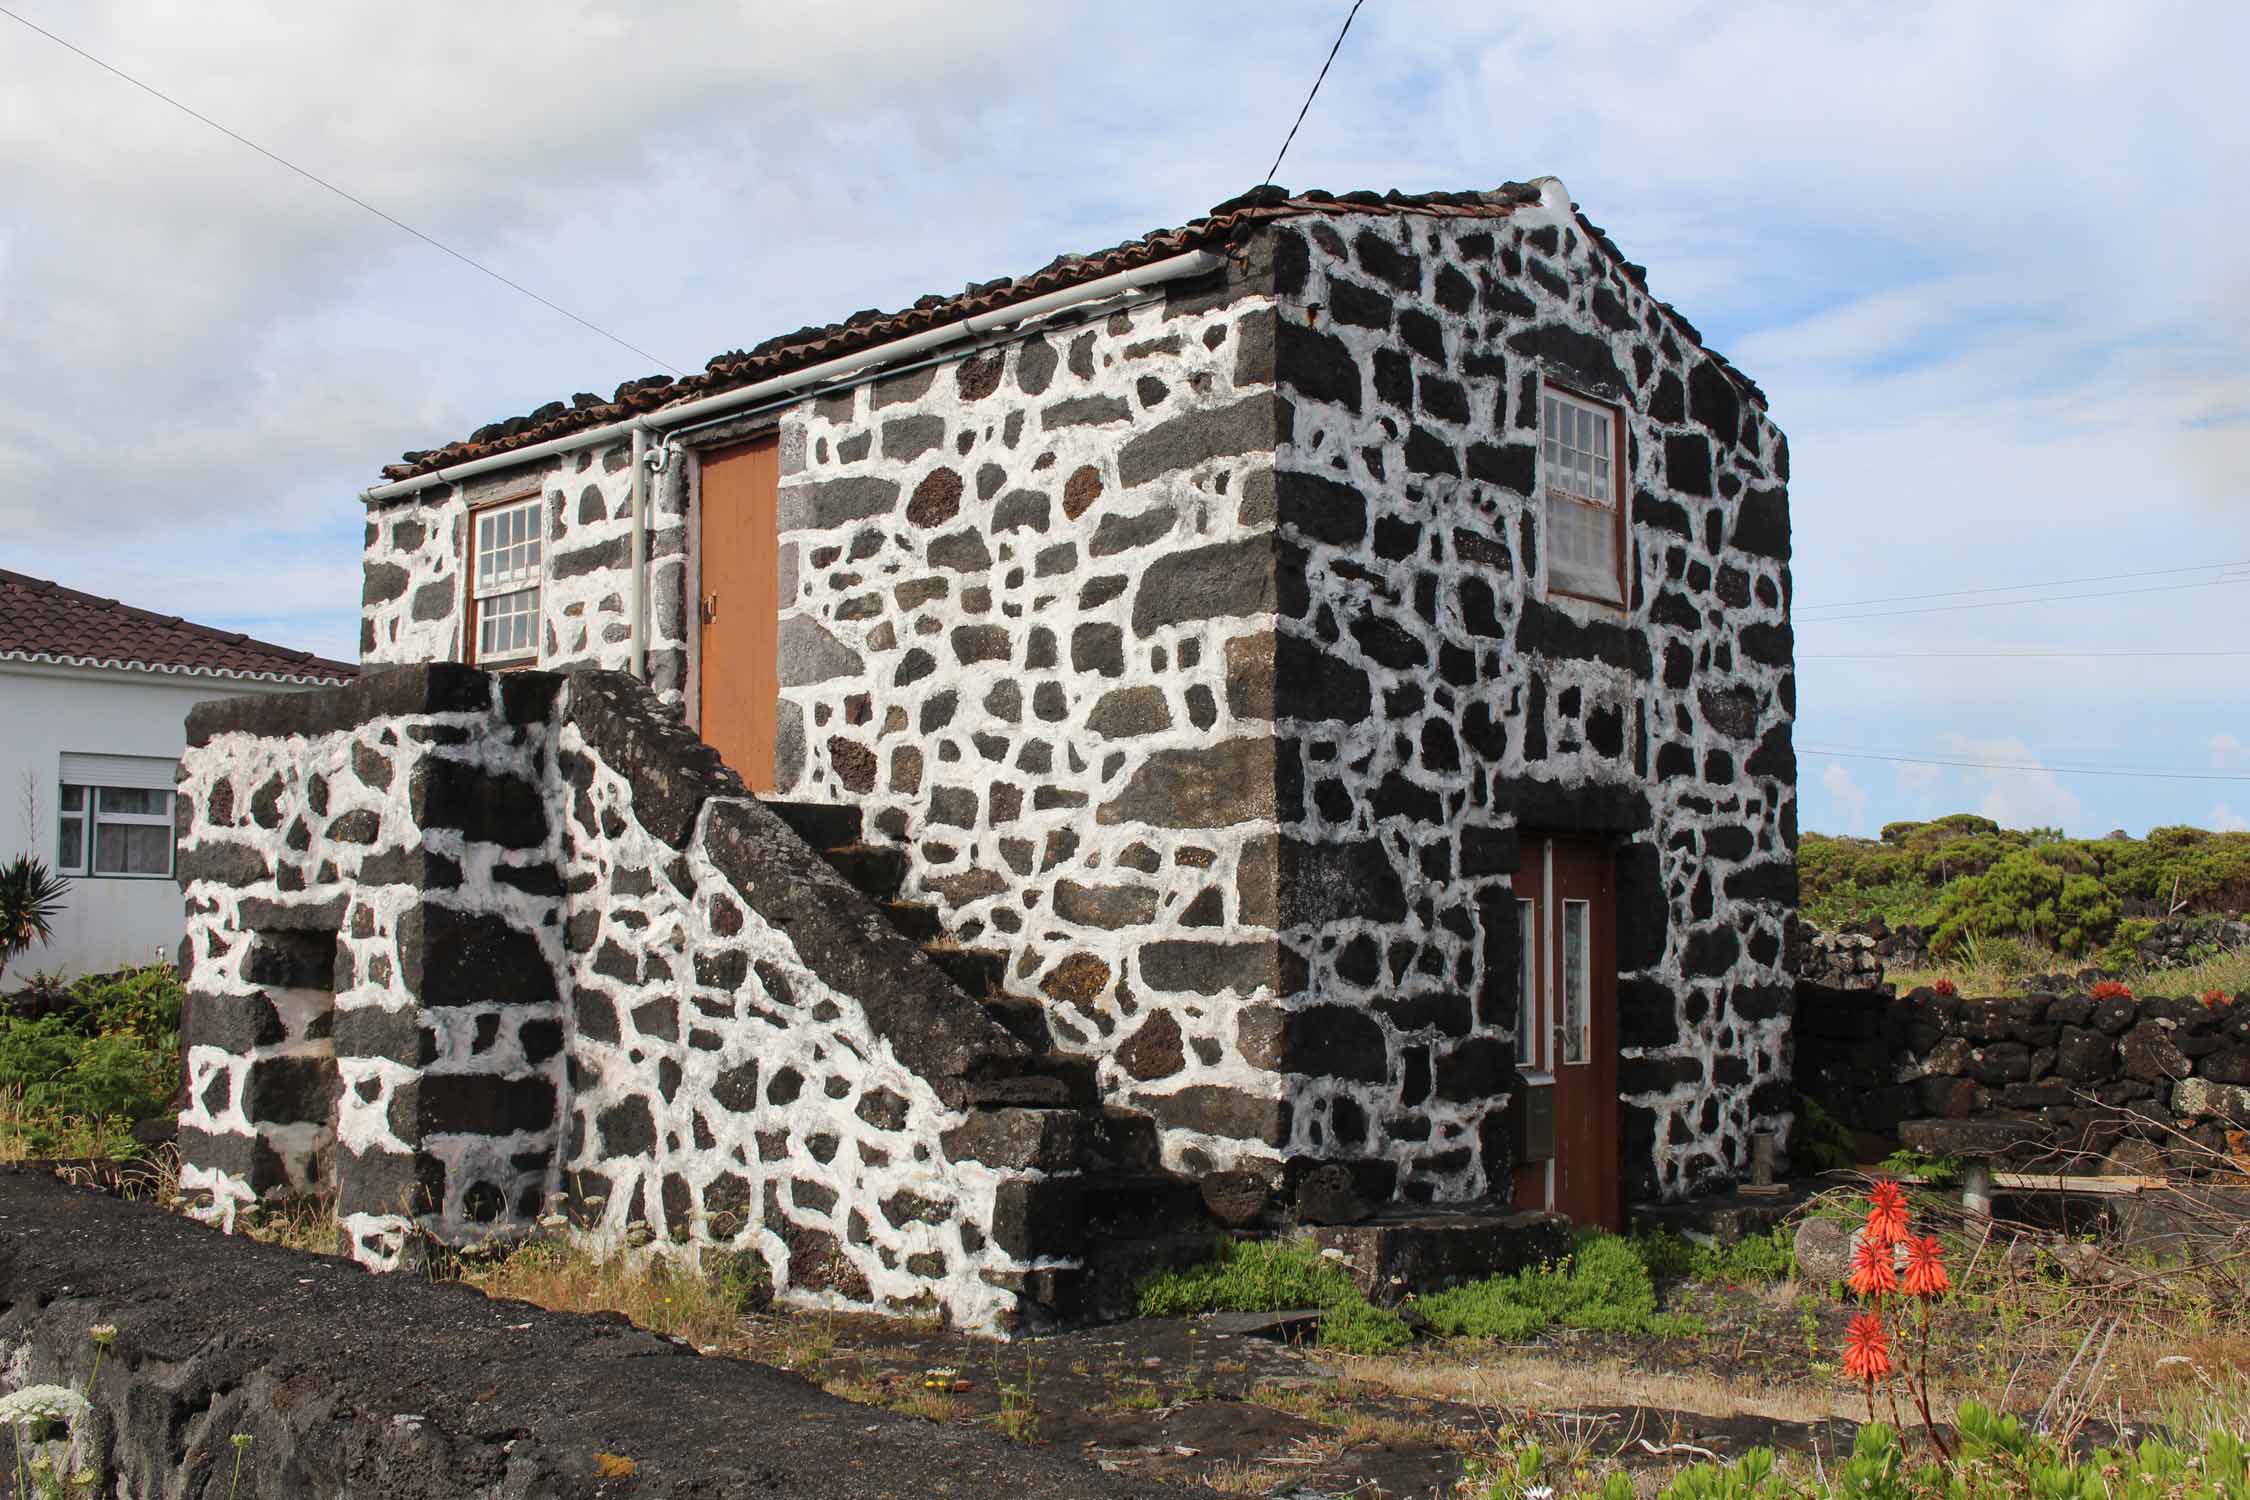 Açores, Île de Pico, Arcos, maison typique